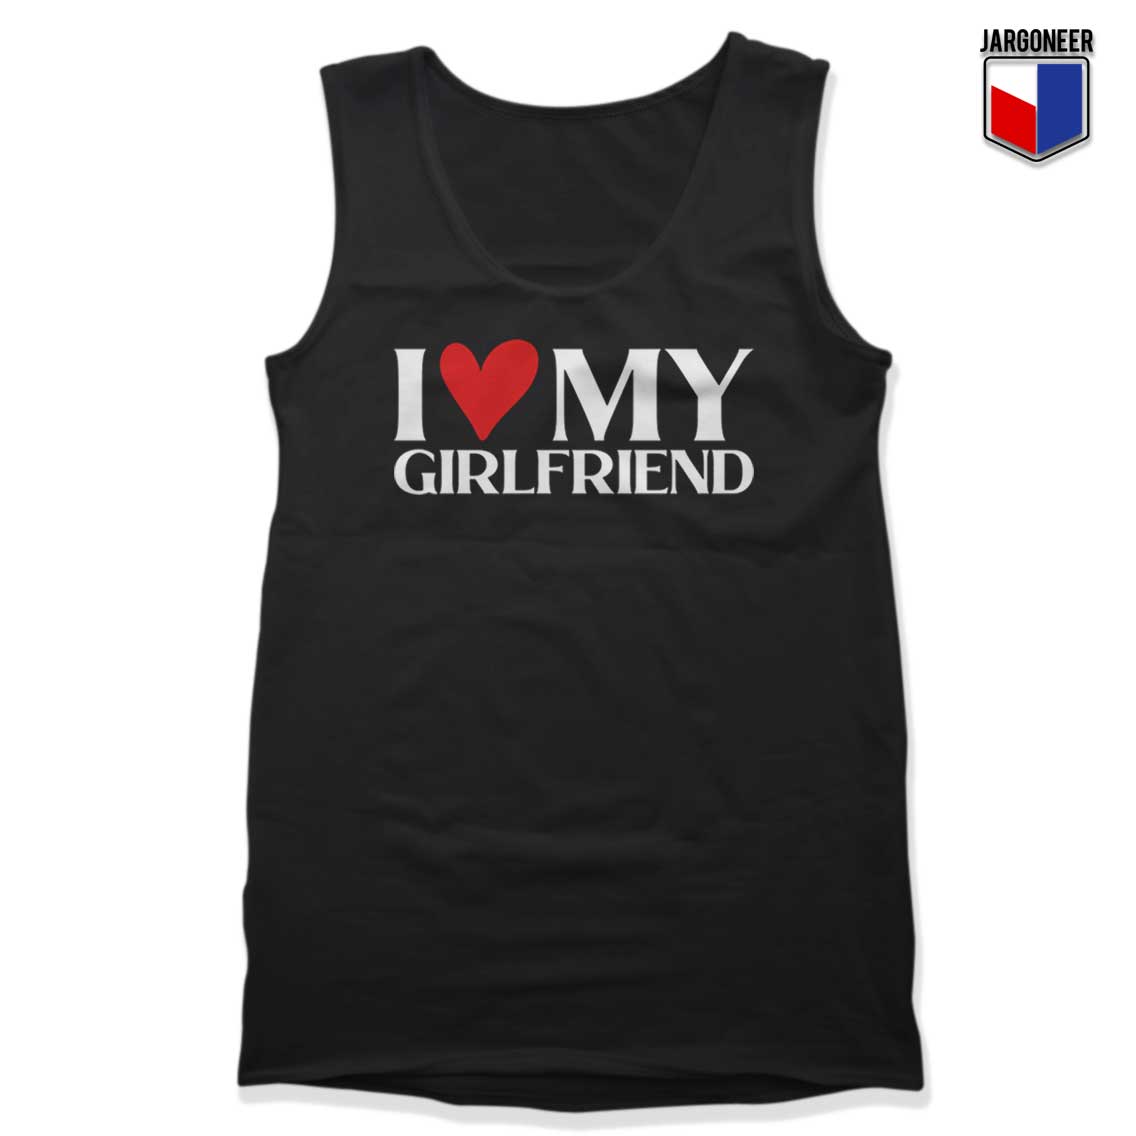 I Love My Girlfriend Tank Top - Shop Unique Graphic Cool Shirt Designs